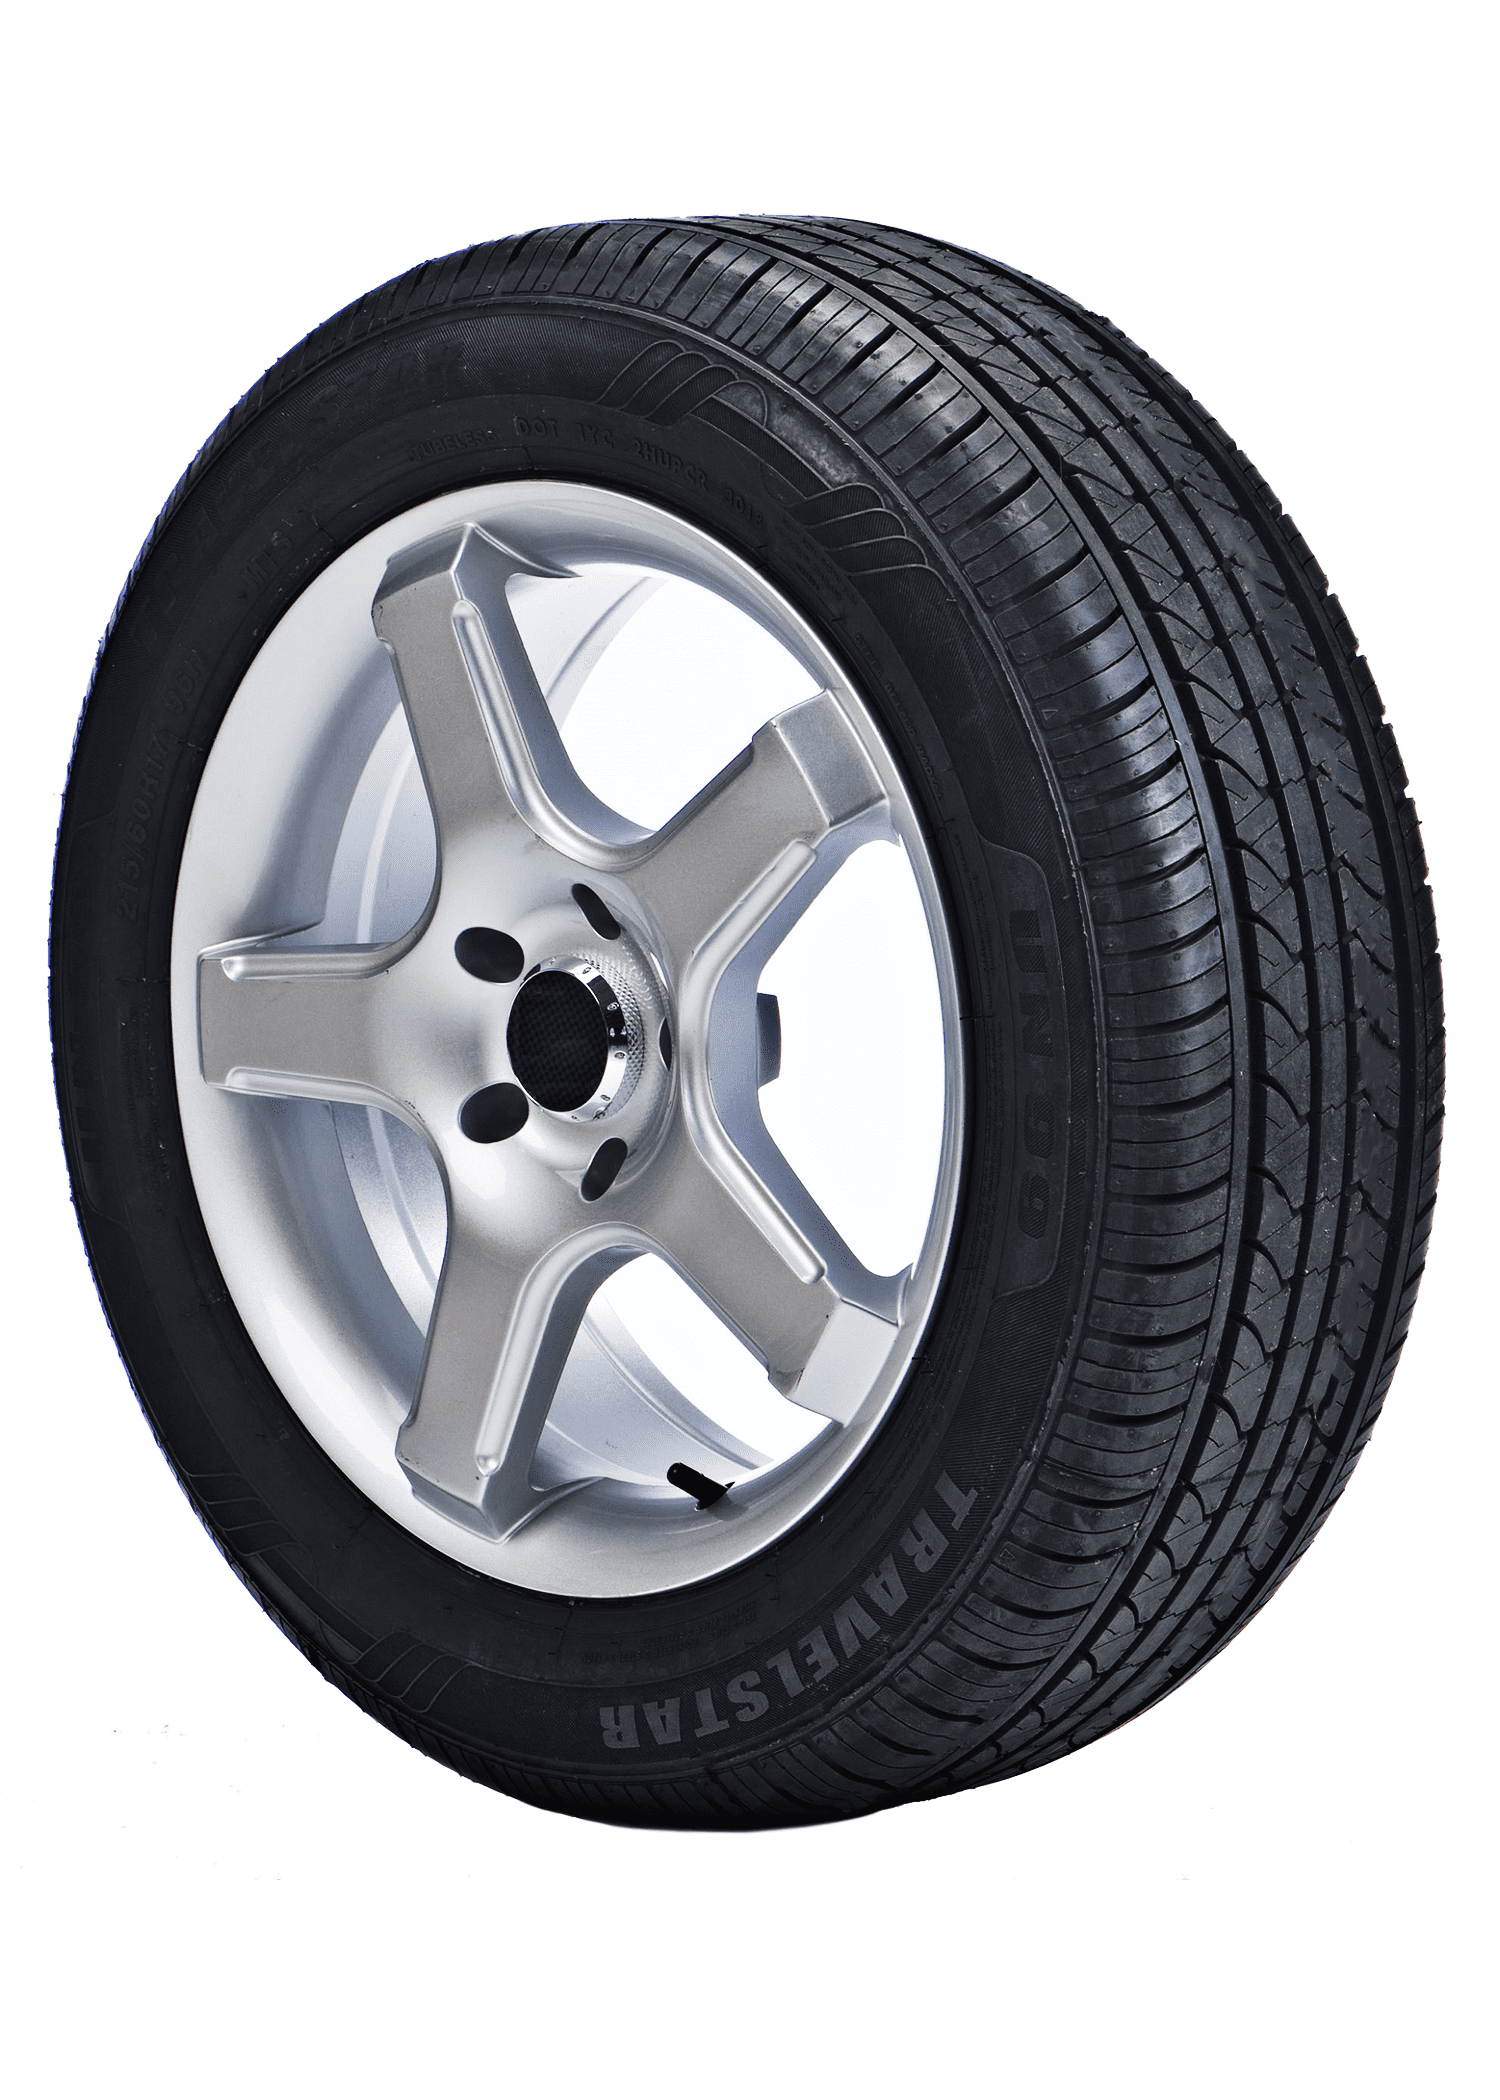 One New Vredestein Quatrac Pro 225/60R17 103V XL A/S Performance Tire Fits:  2018-23 Subaru Crosstrek Convenience, 2019-21 Jeep Cherokee Latitude Plus